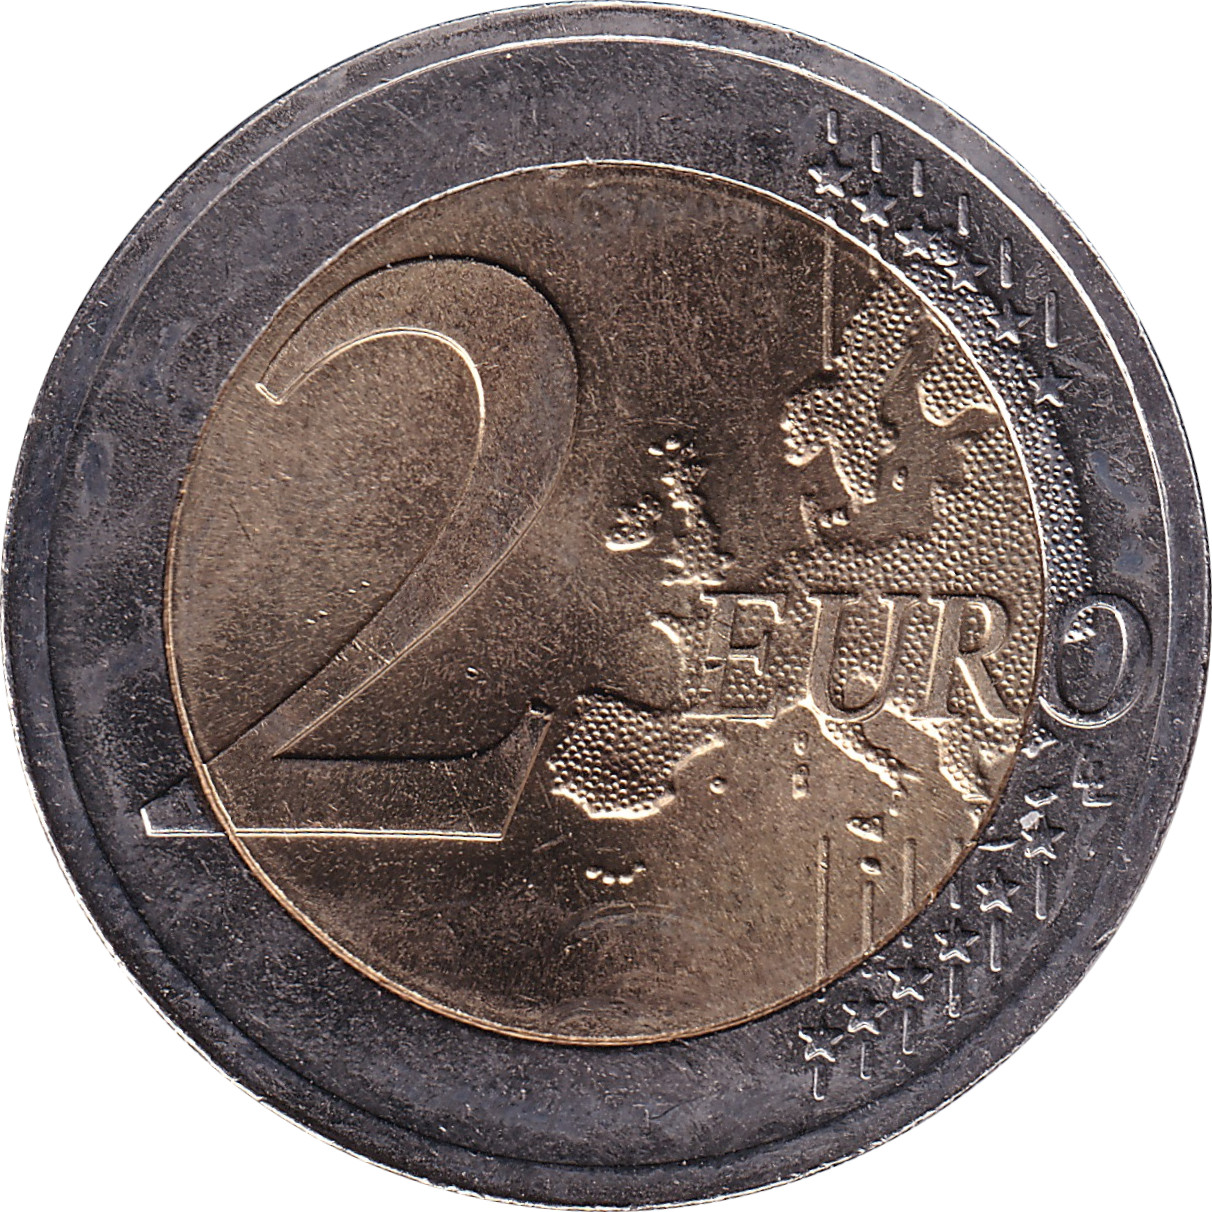 2 euro - Indépendance - 100 years